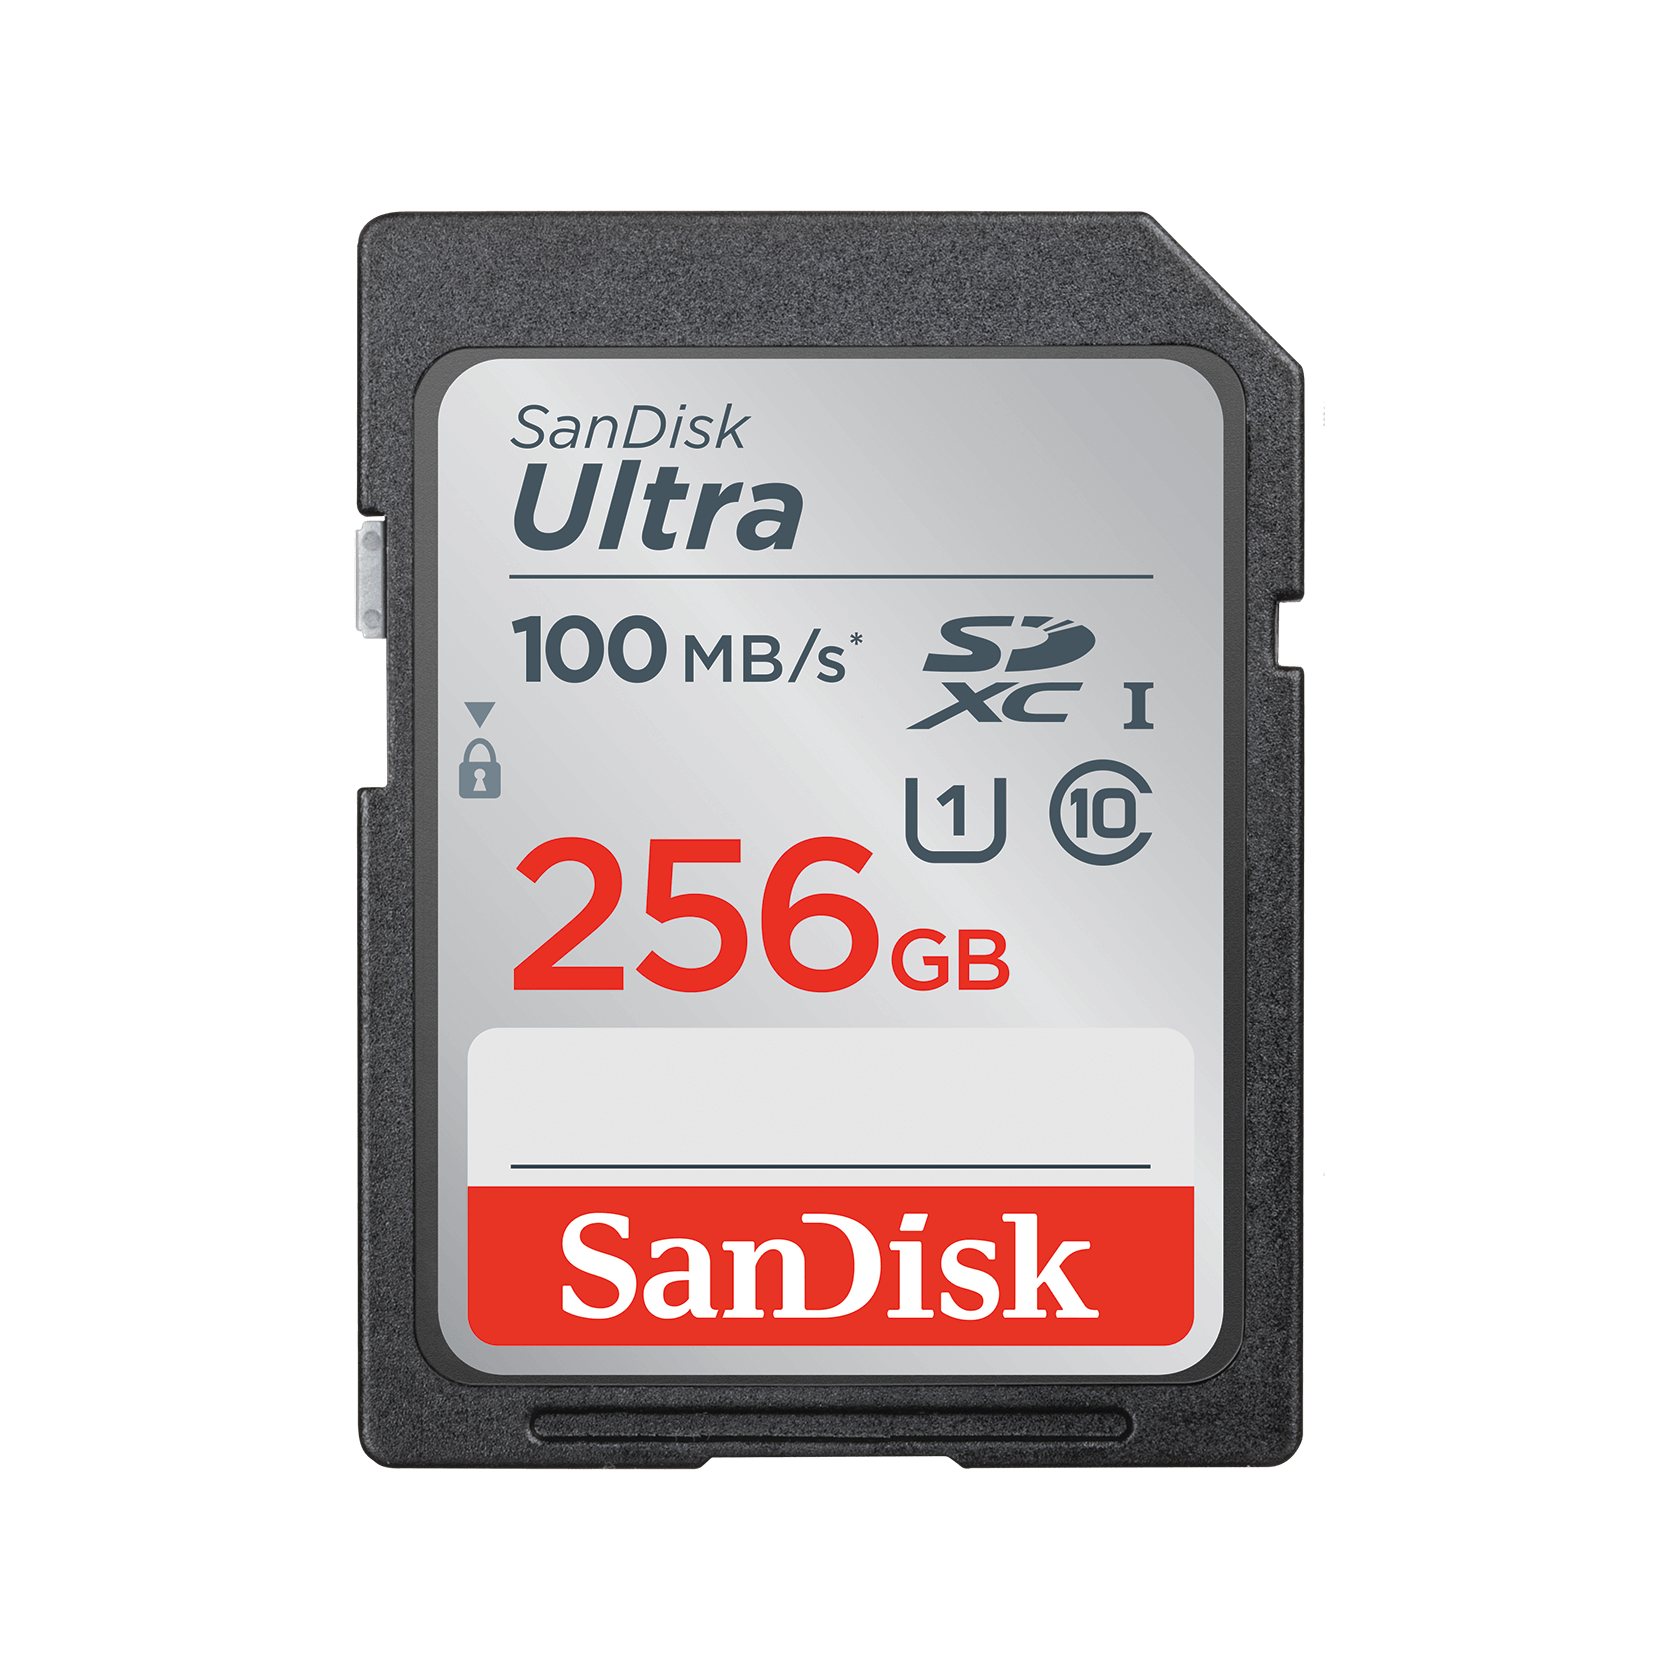 SanDisk Ultra SDHC/SDXC Memory Card 256GB - SDSDUNR-256G-AN6IN